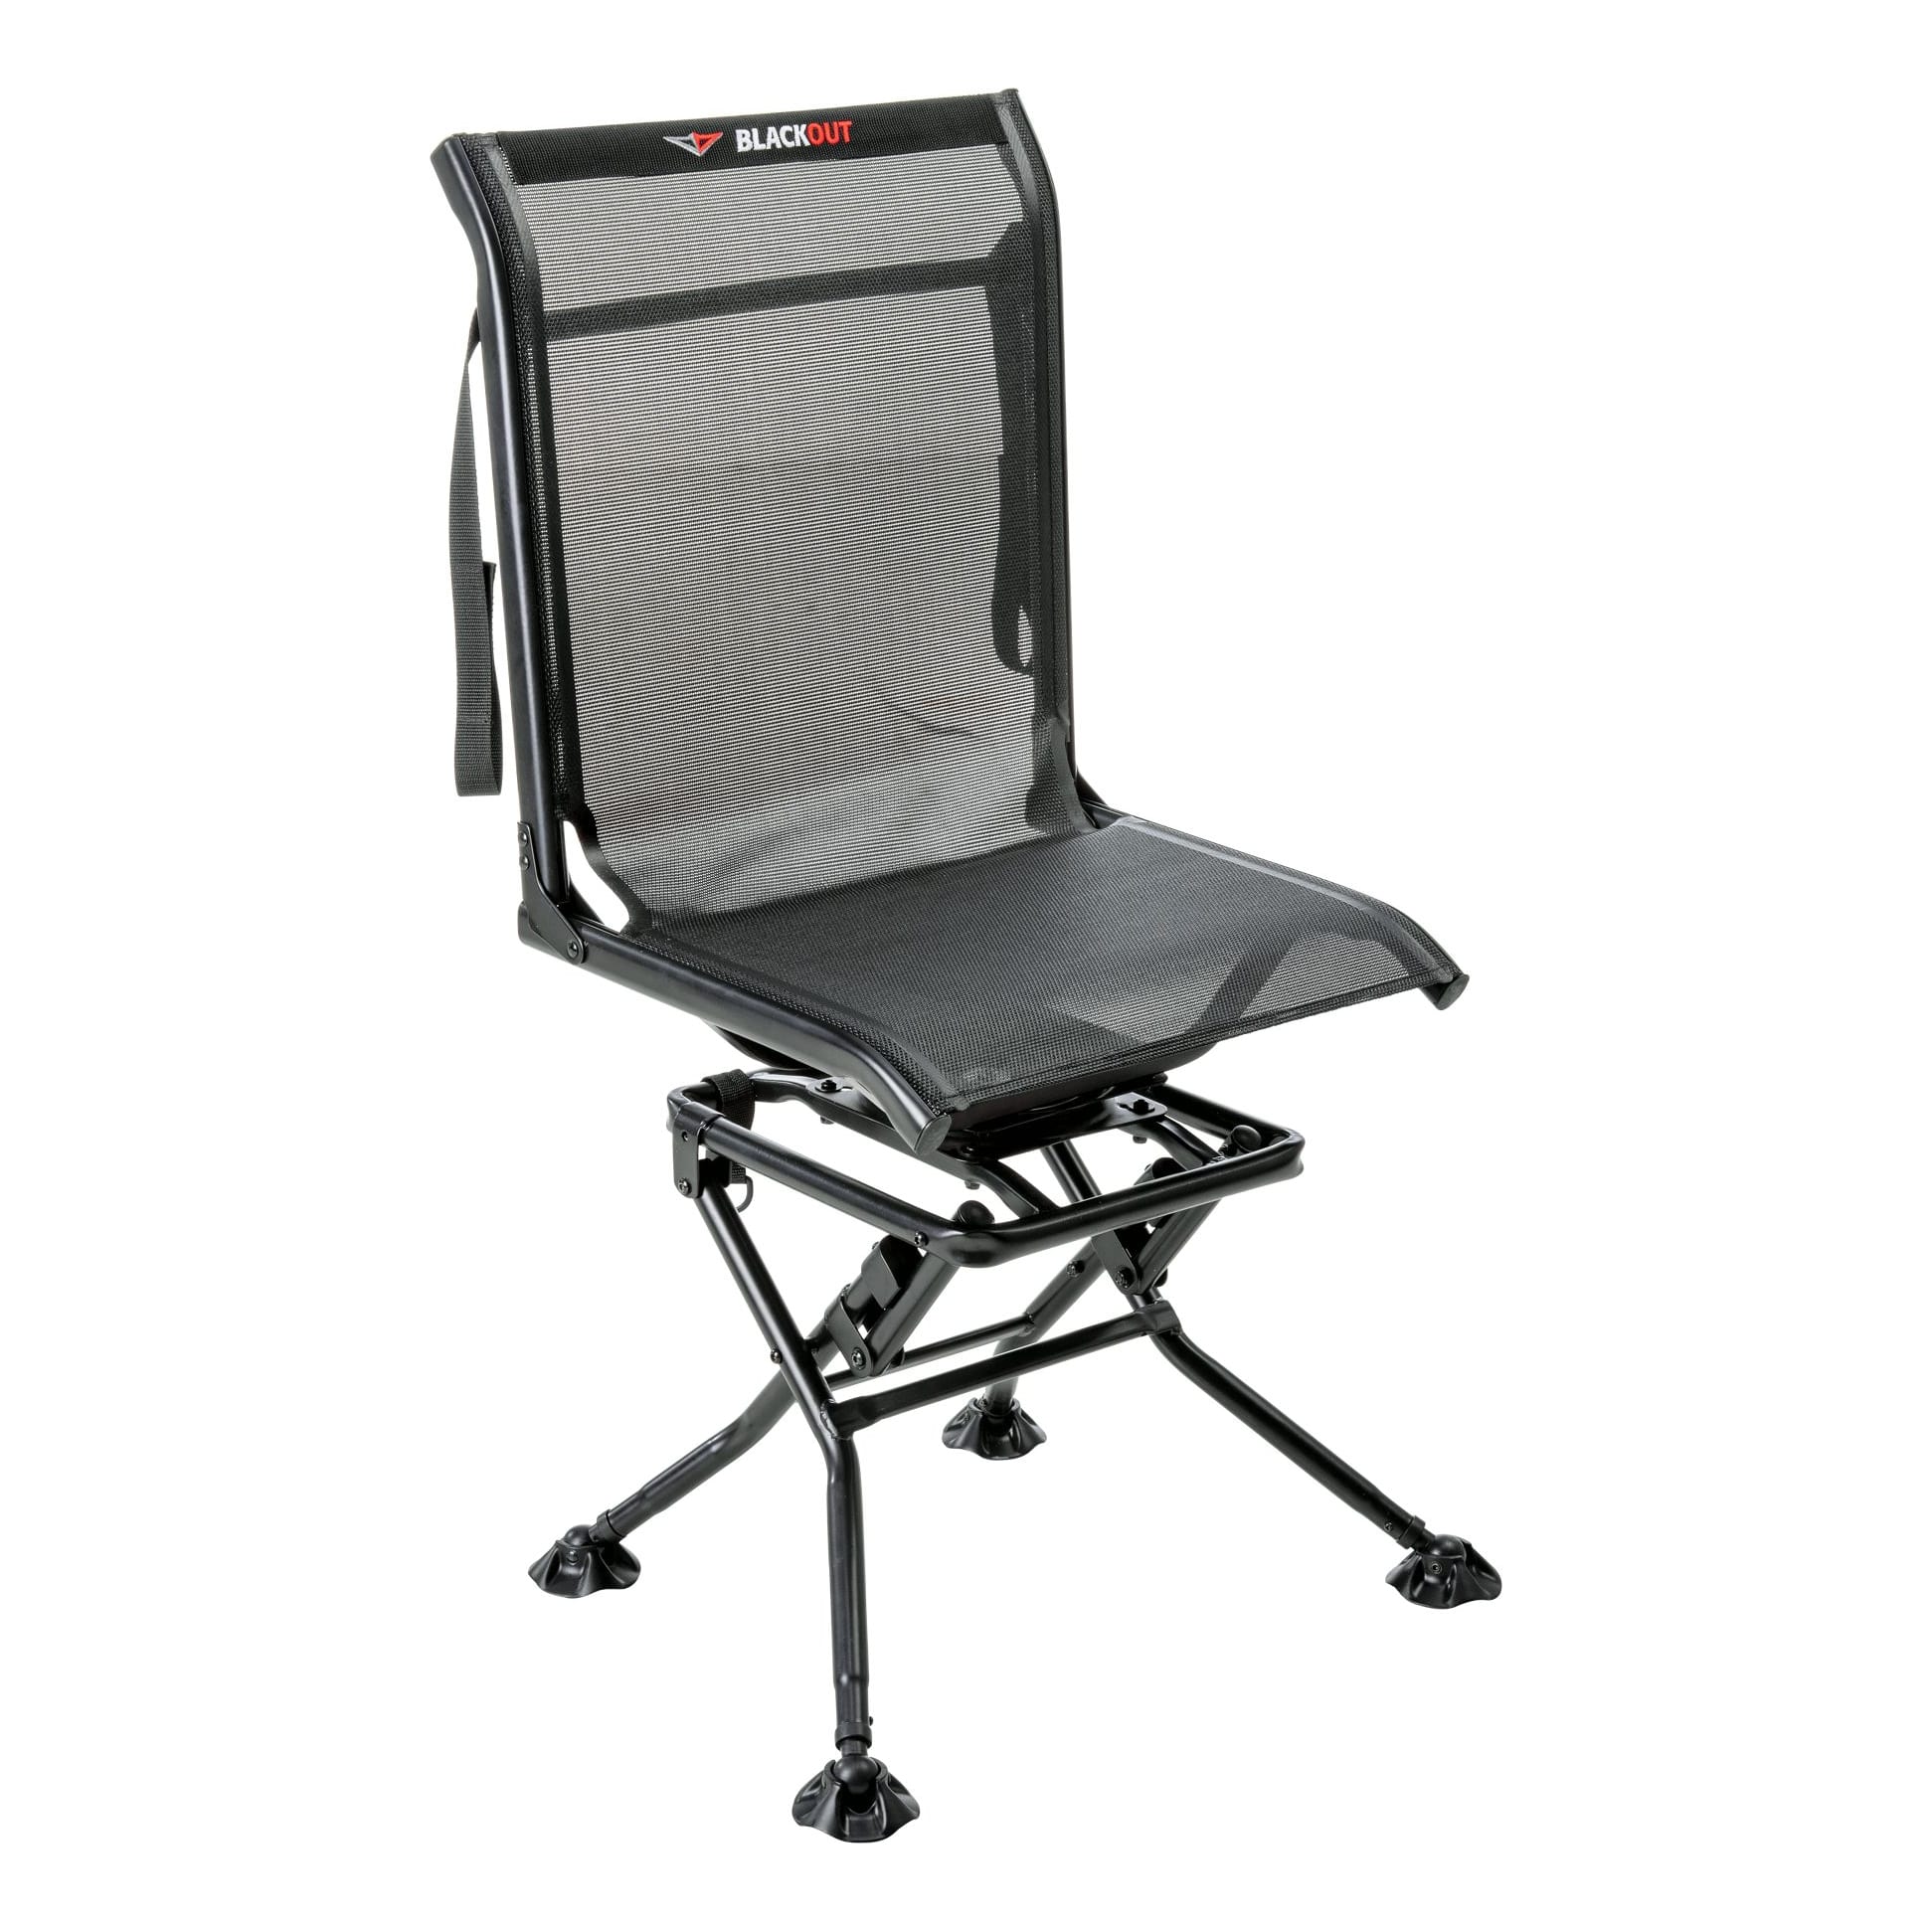 Cabela's BlackOut Comfort Max 360 Original Blind Chair